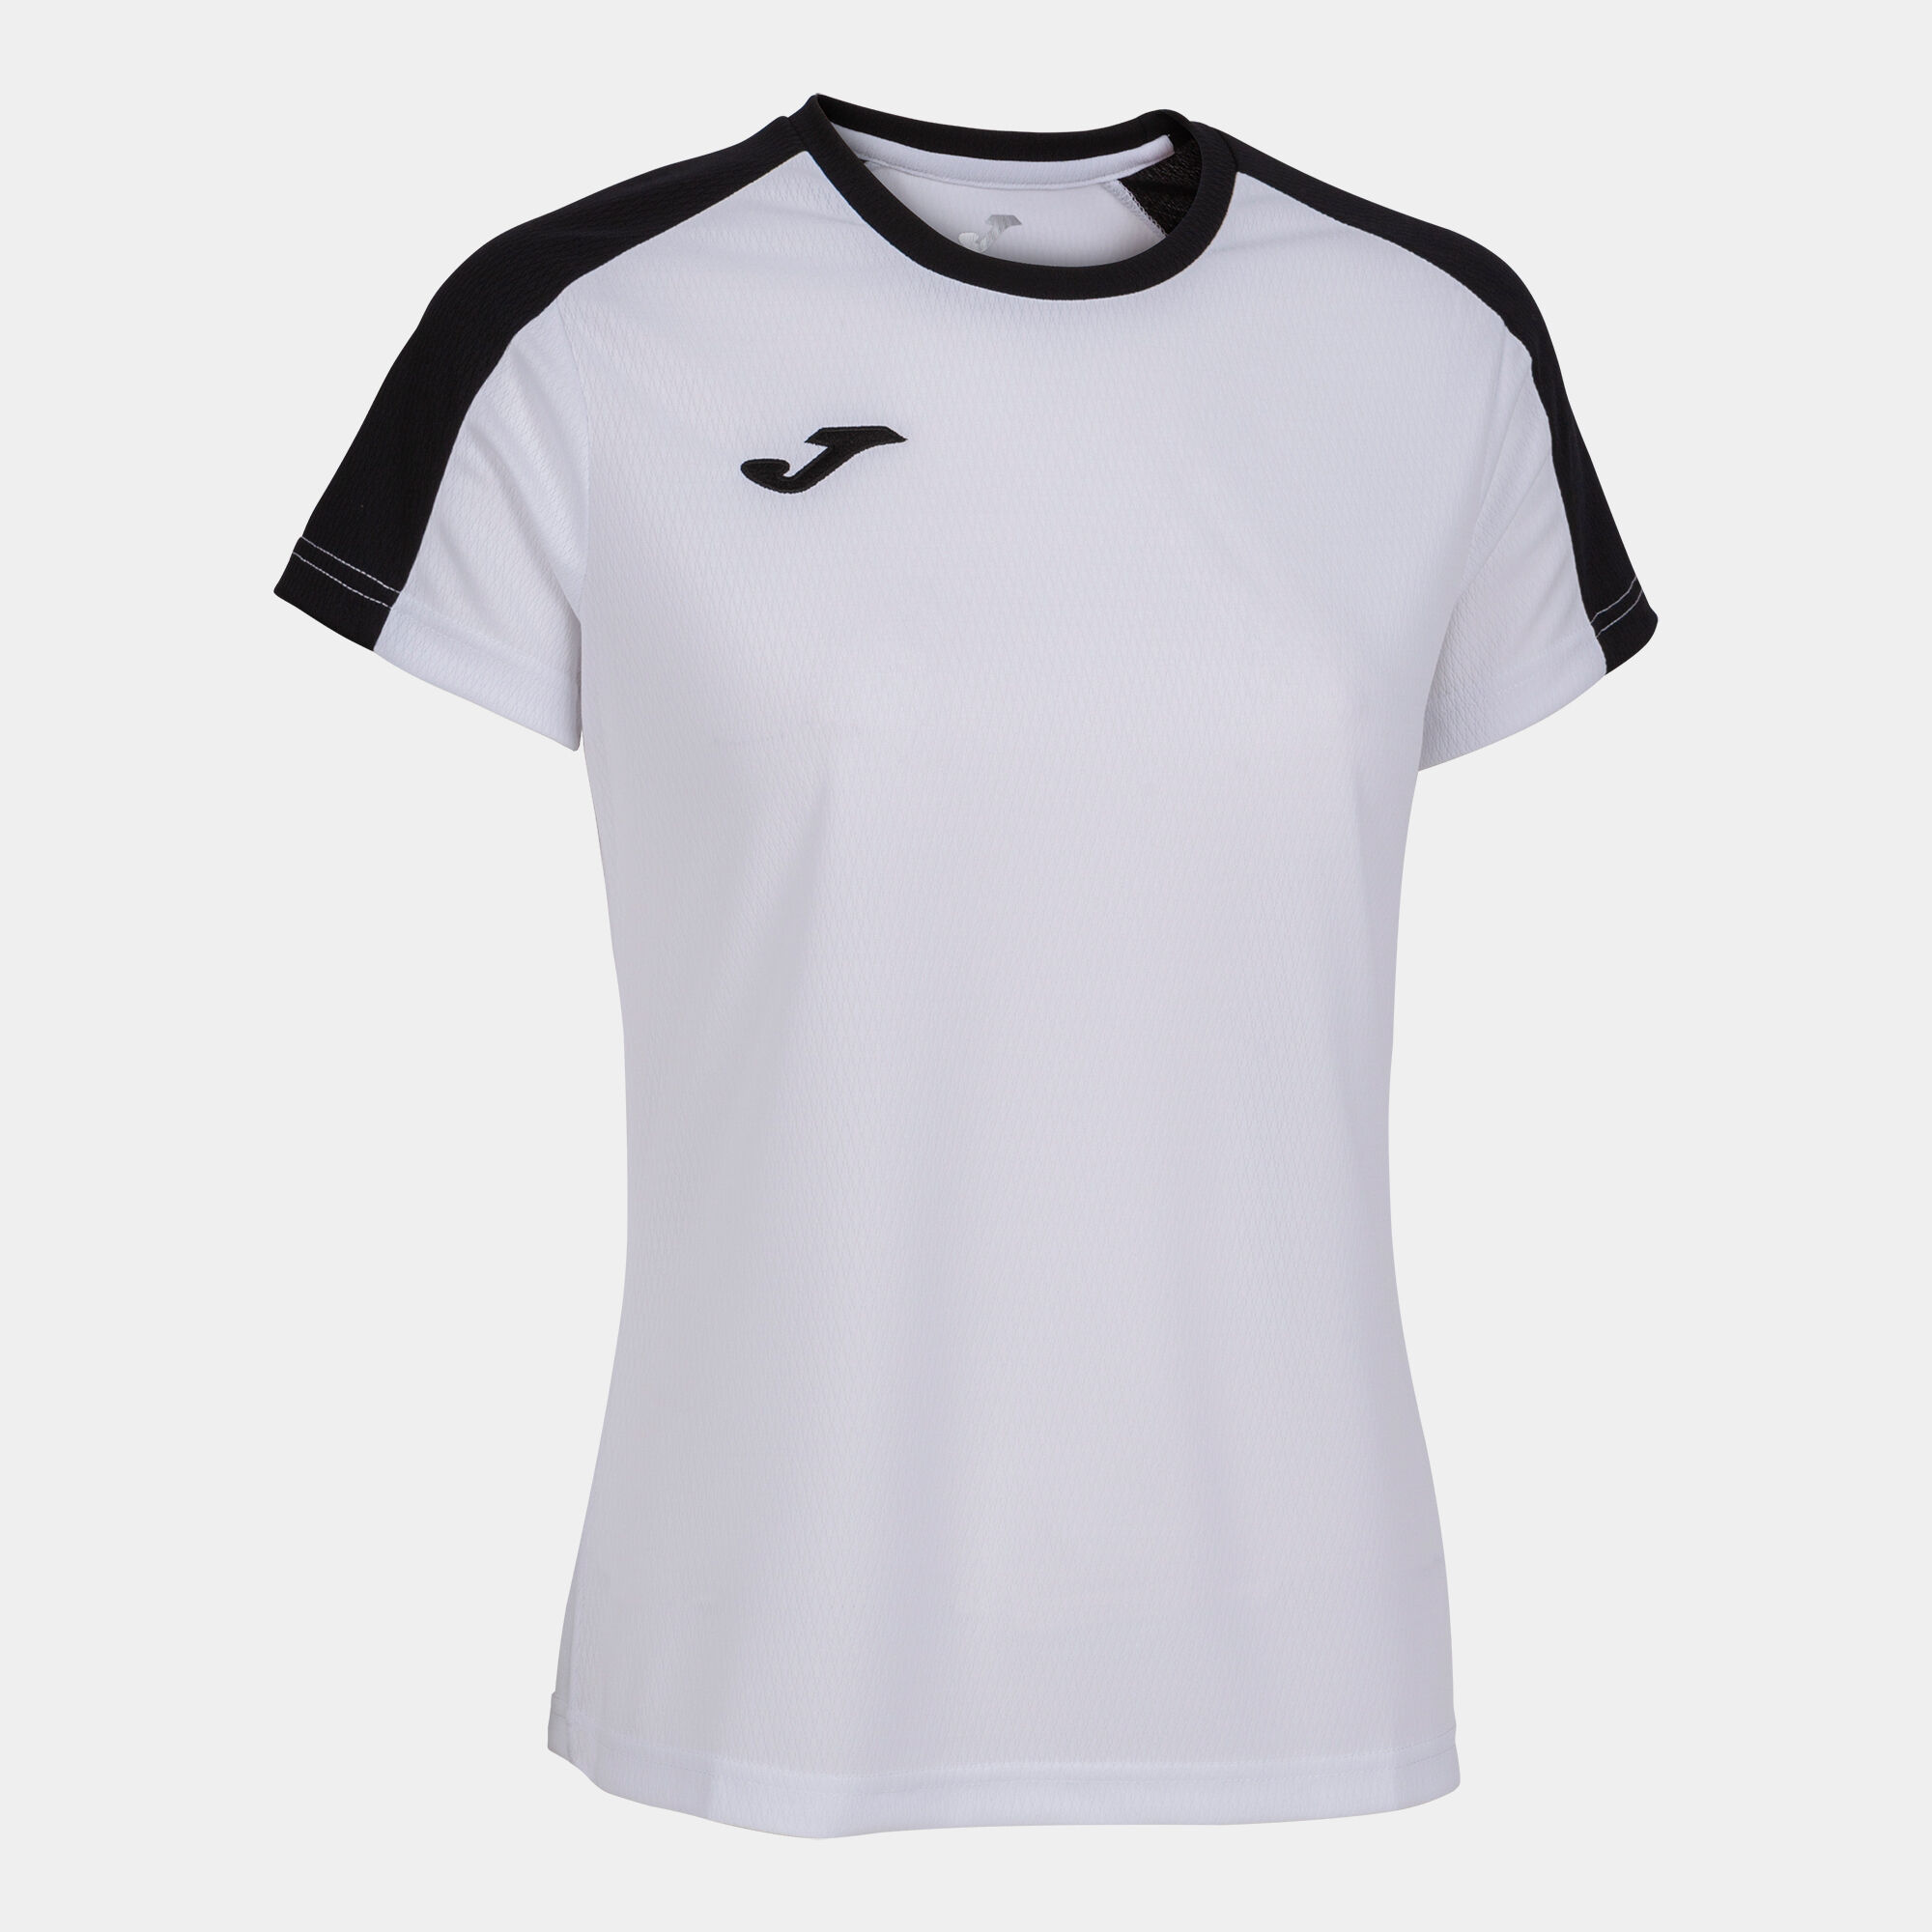 Shirt short sleeve woman Eco Championship white black